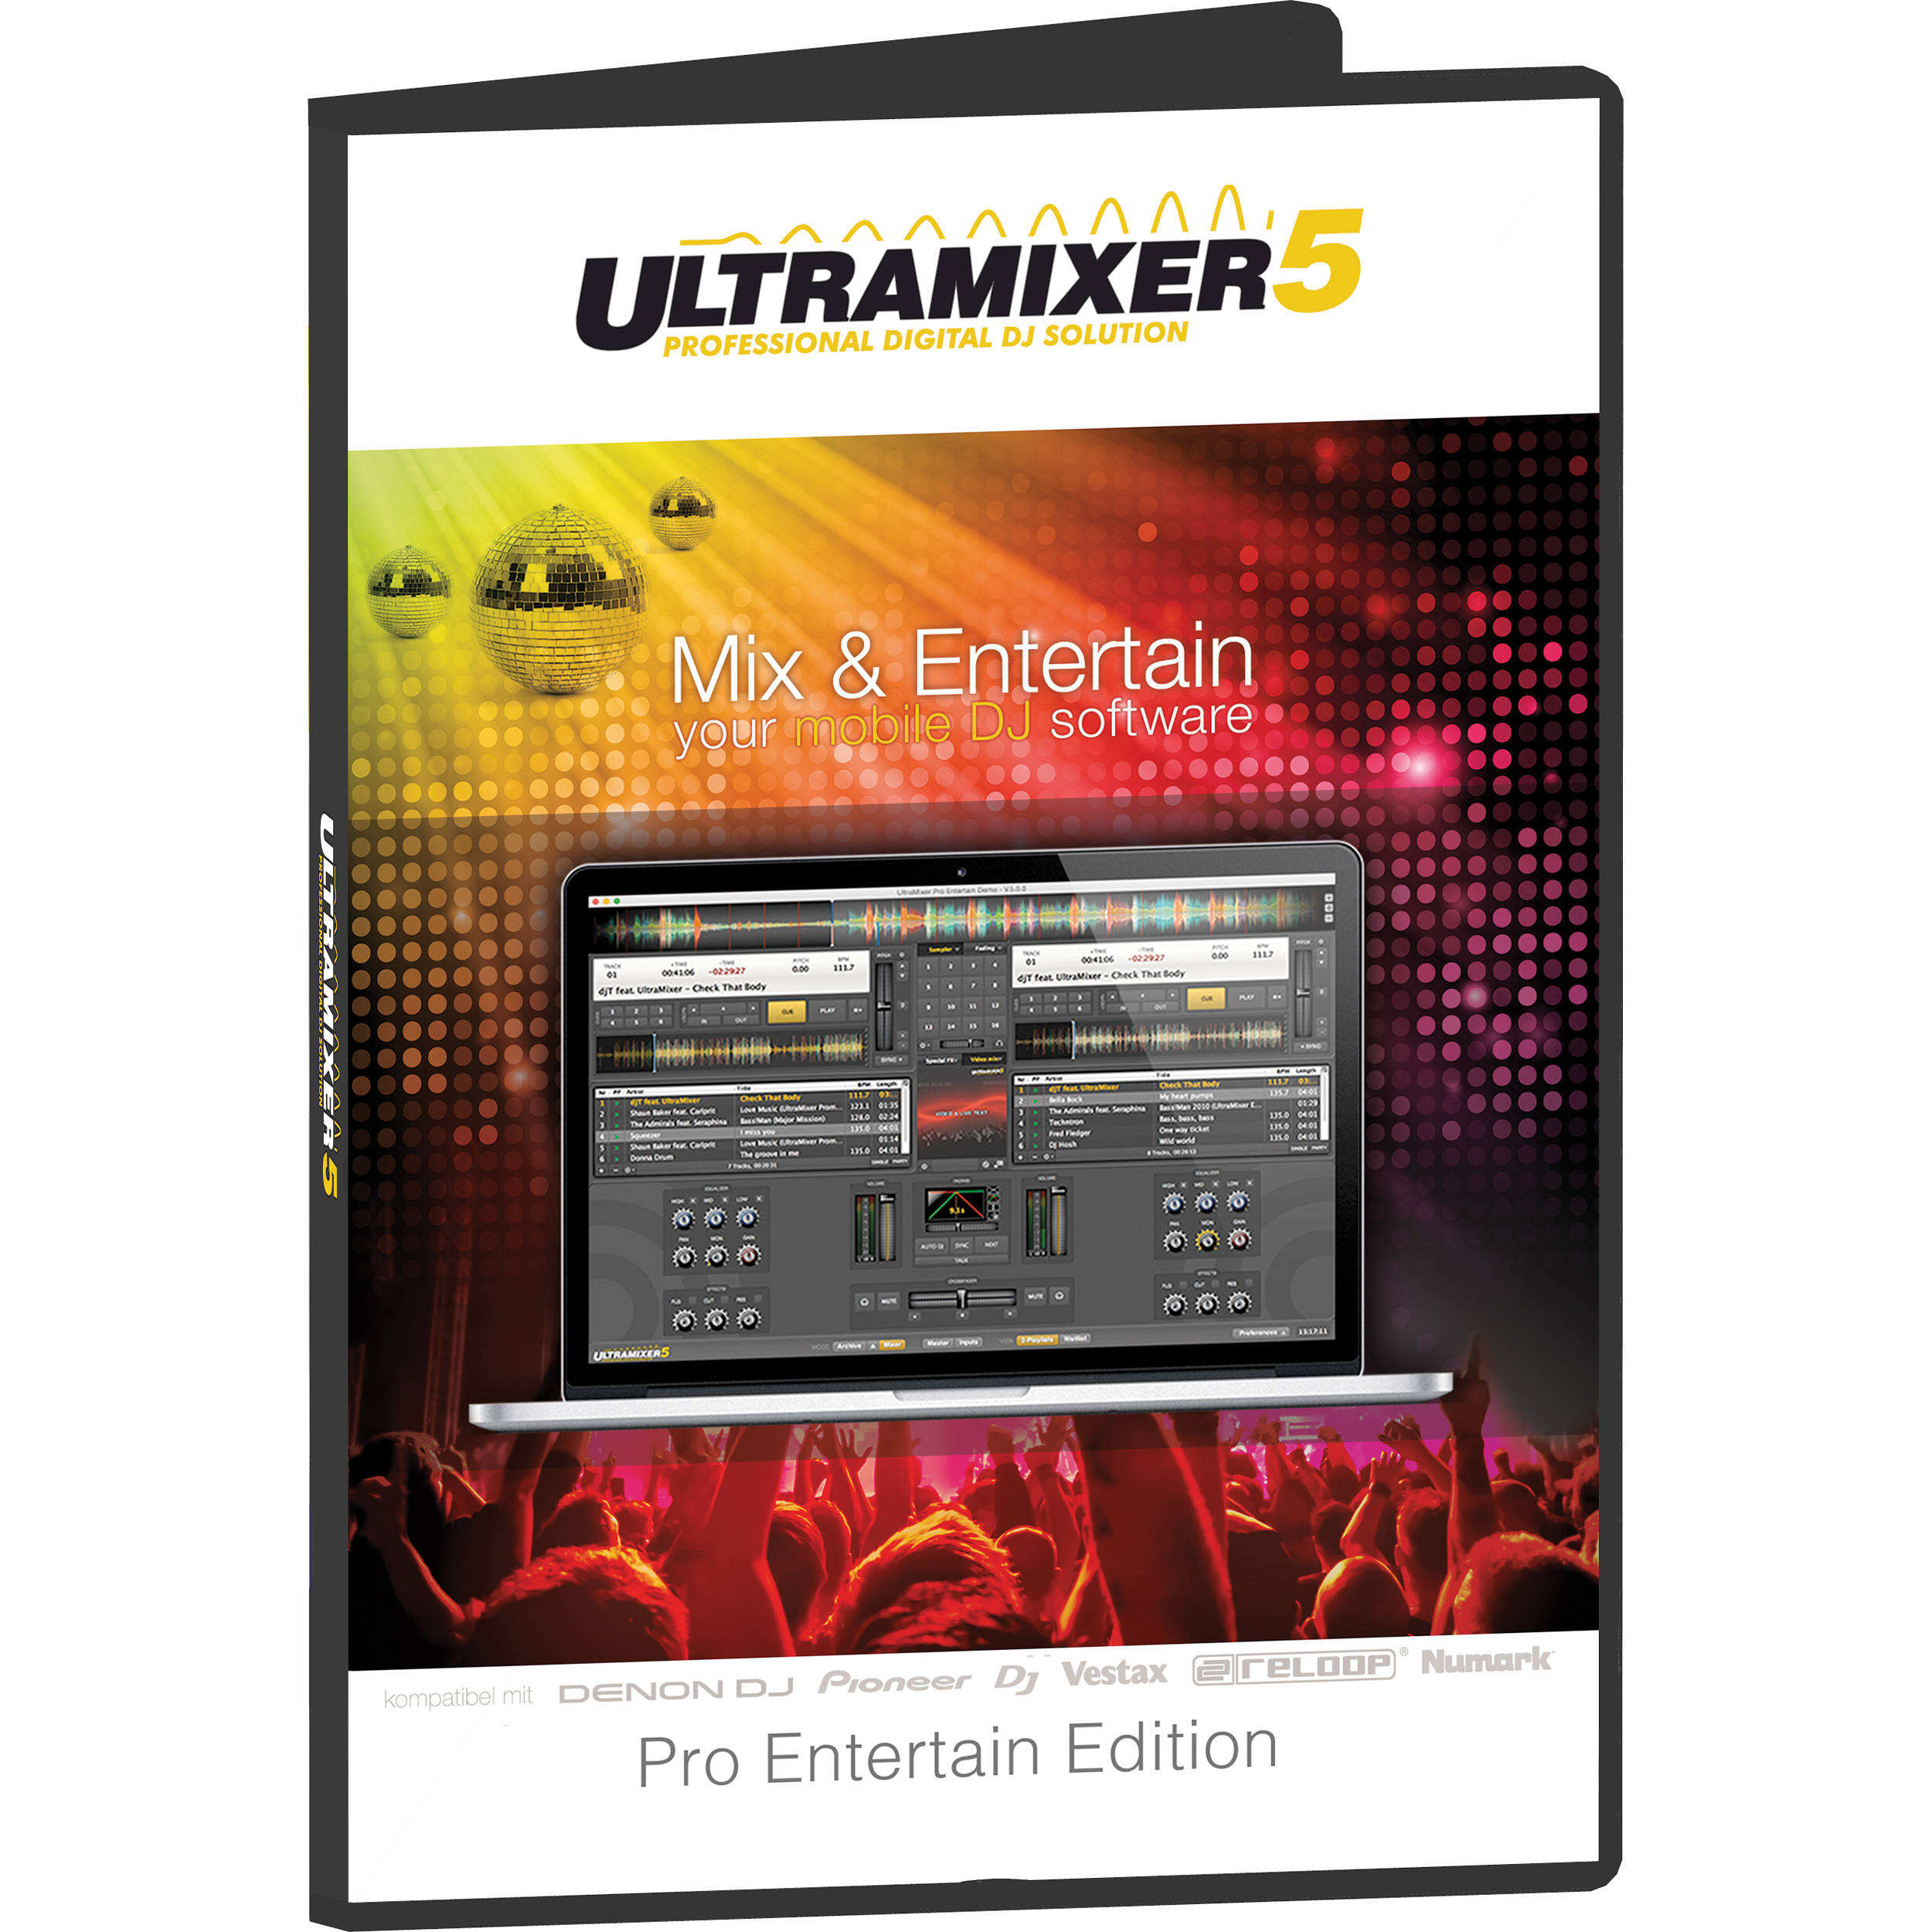 Ultramixer 5 Pro